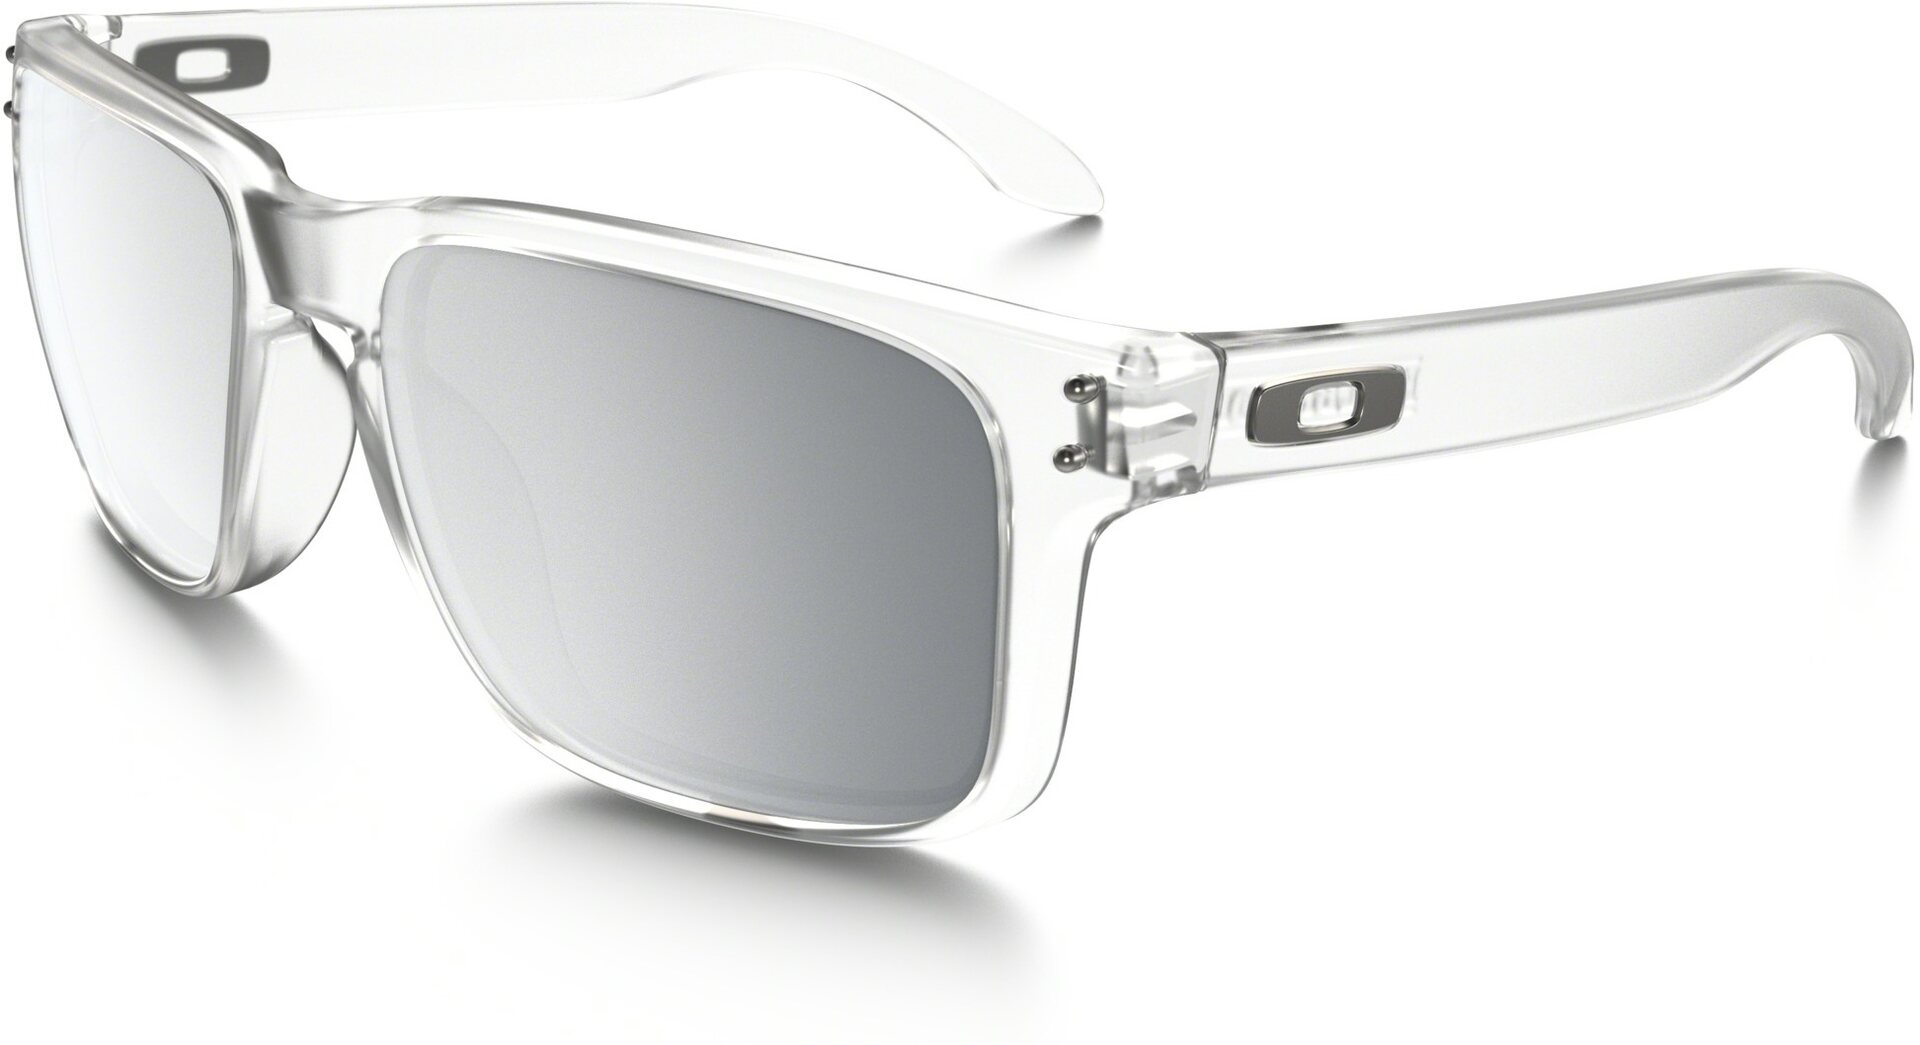 Examinar detenidamente reflejar Intacto Oakley Holbrook Matte Clear w/ Chrome Iridium | Oakley Holbrook Sunglasses  | Varuste.net Español